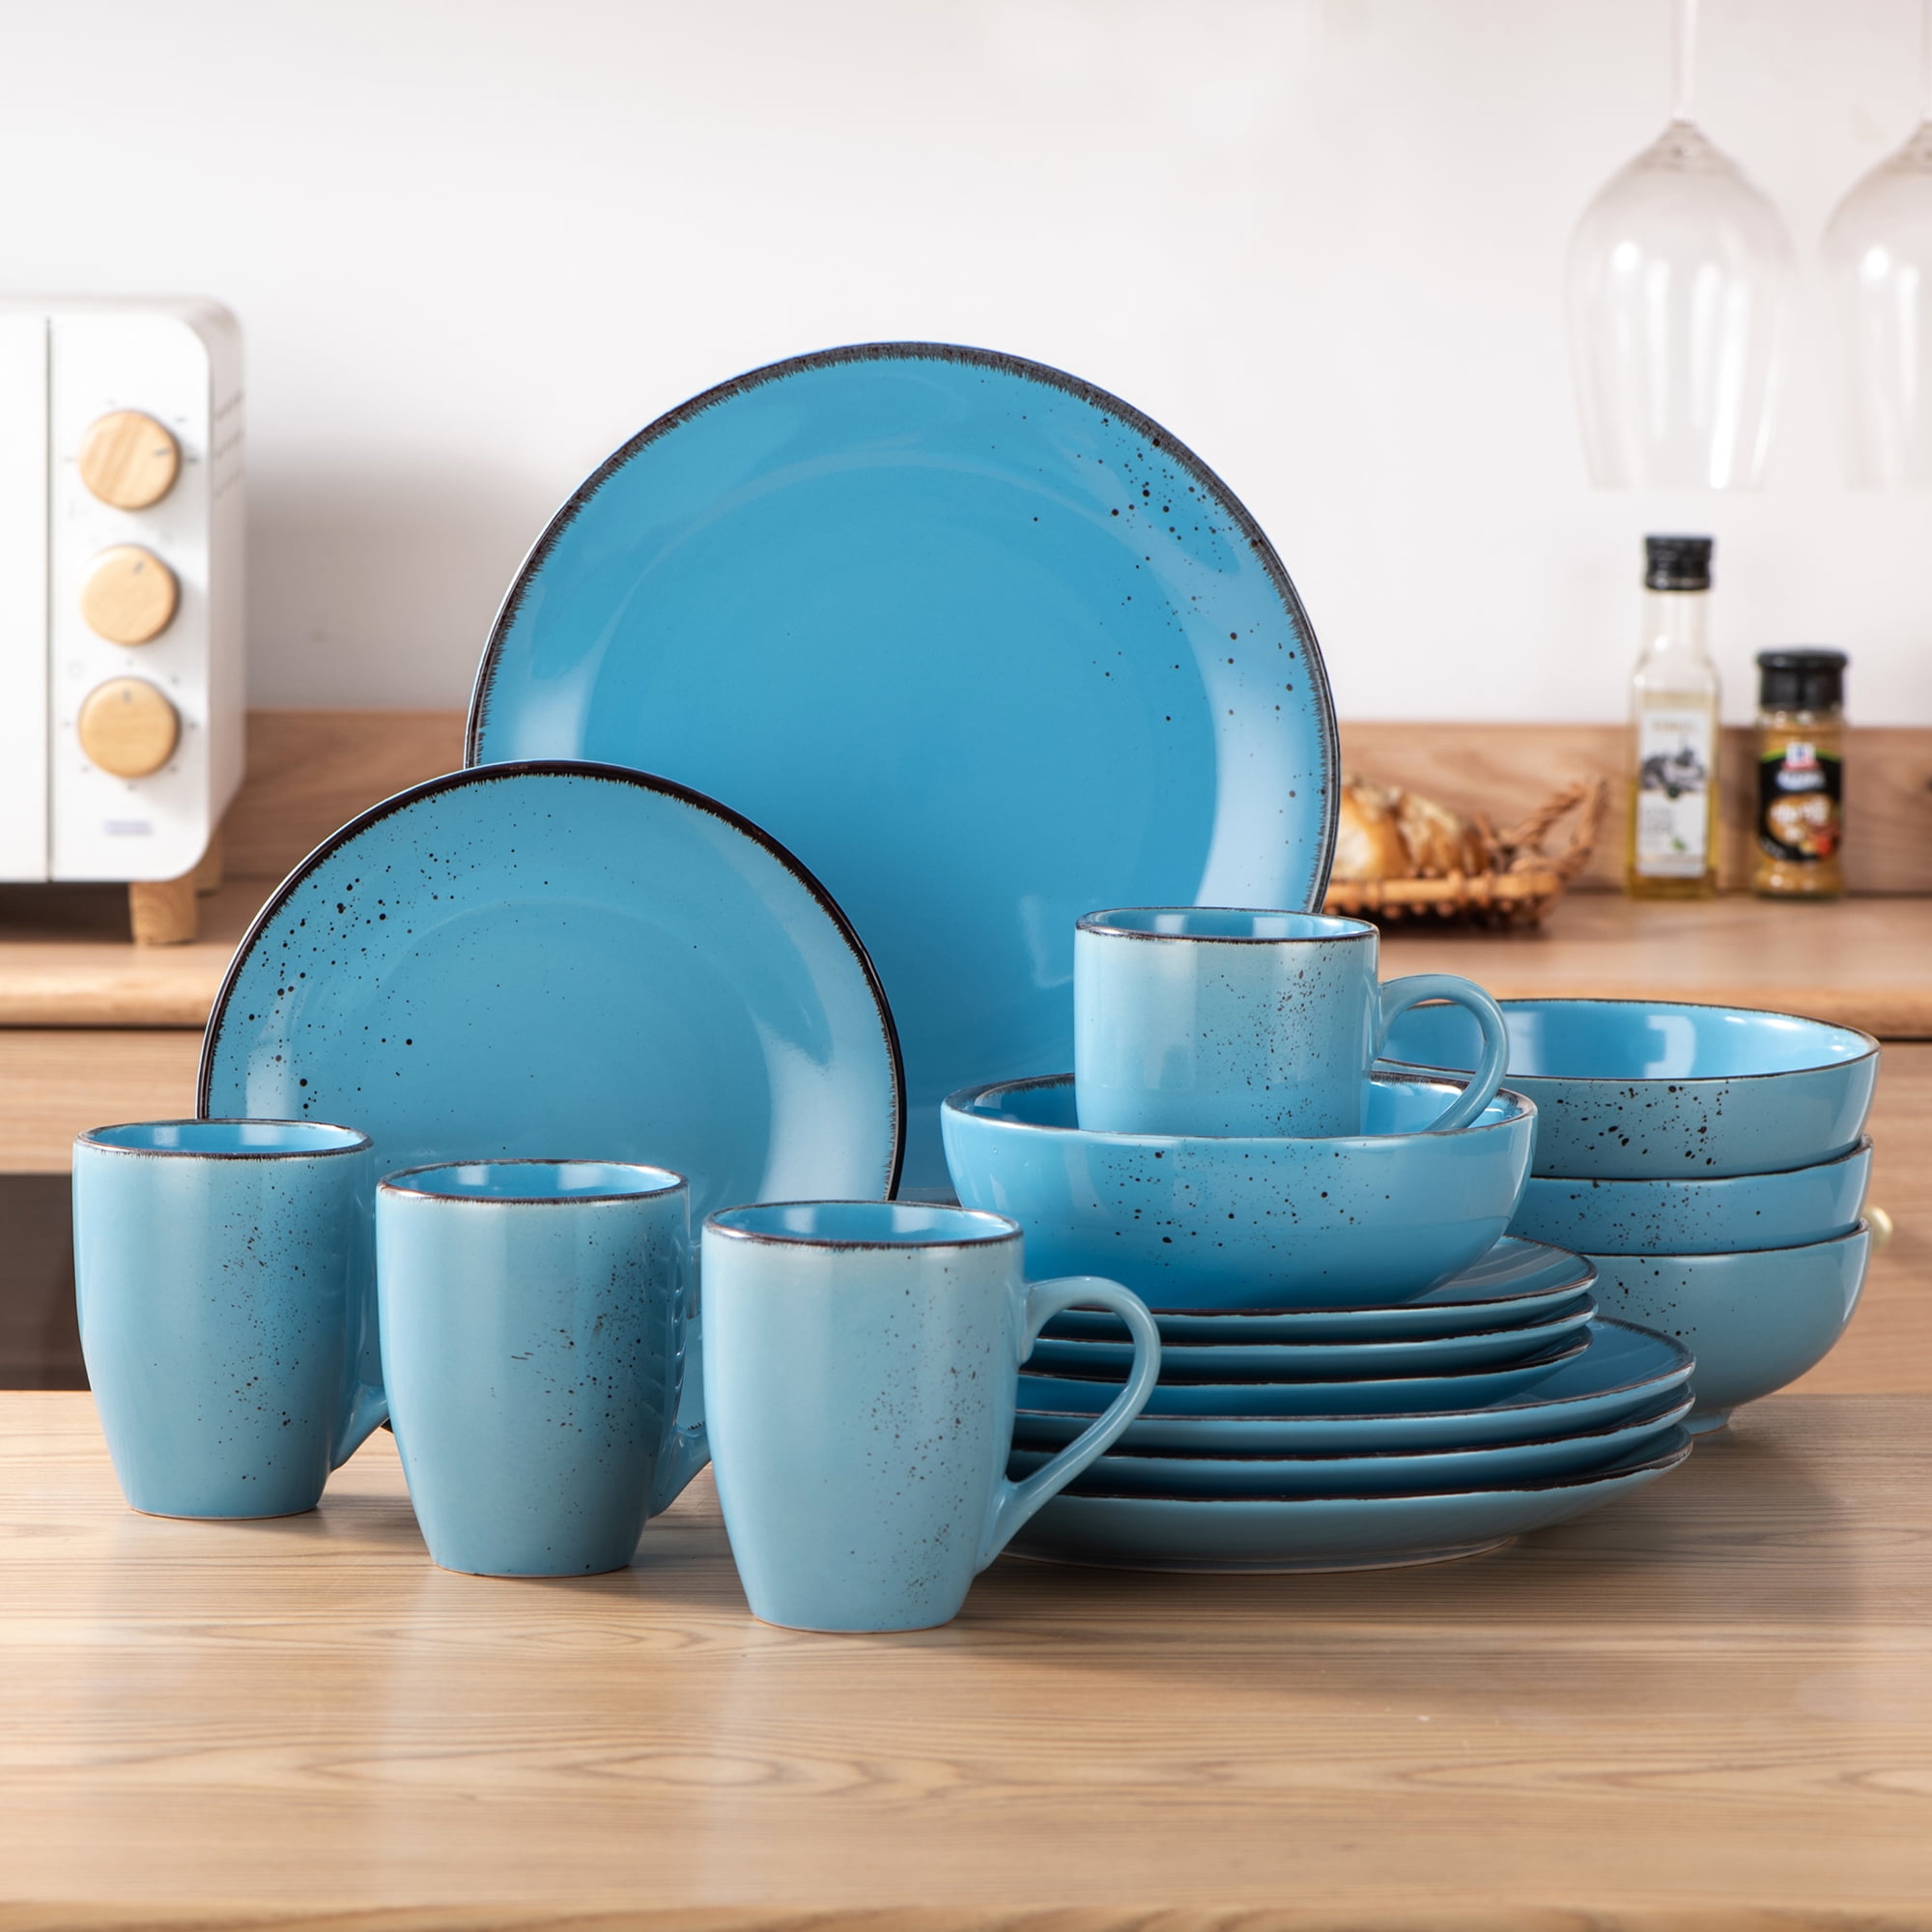 Details about   vancasso AQUA Dinner Plate Set of 4 Irregular Round Stoneware Serving Plate Blue 